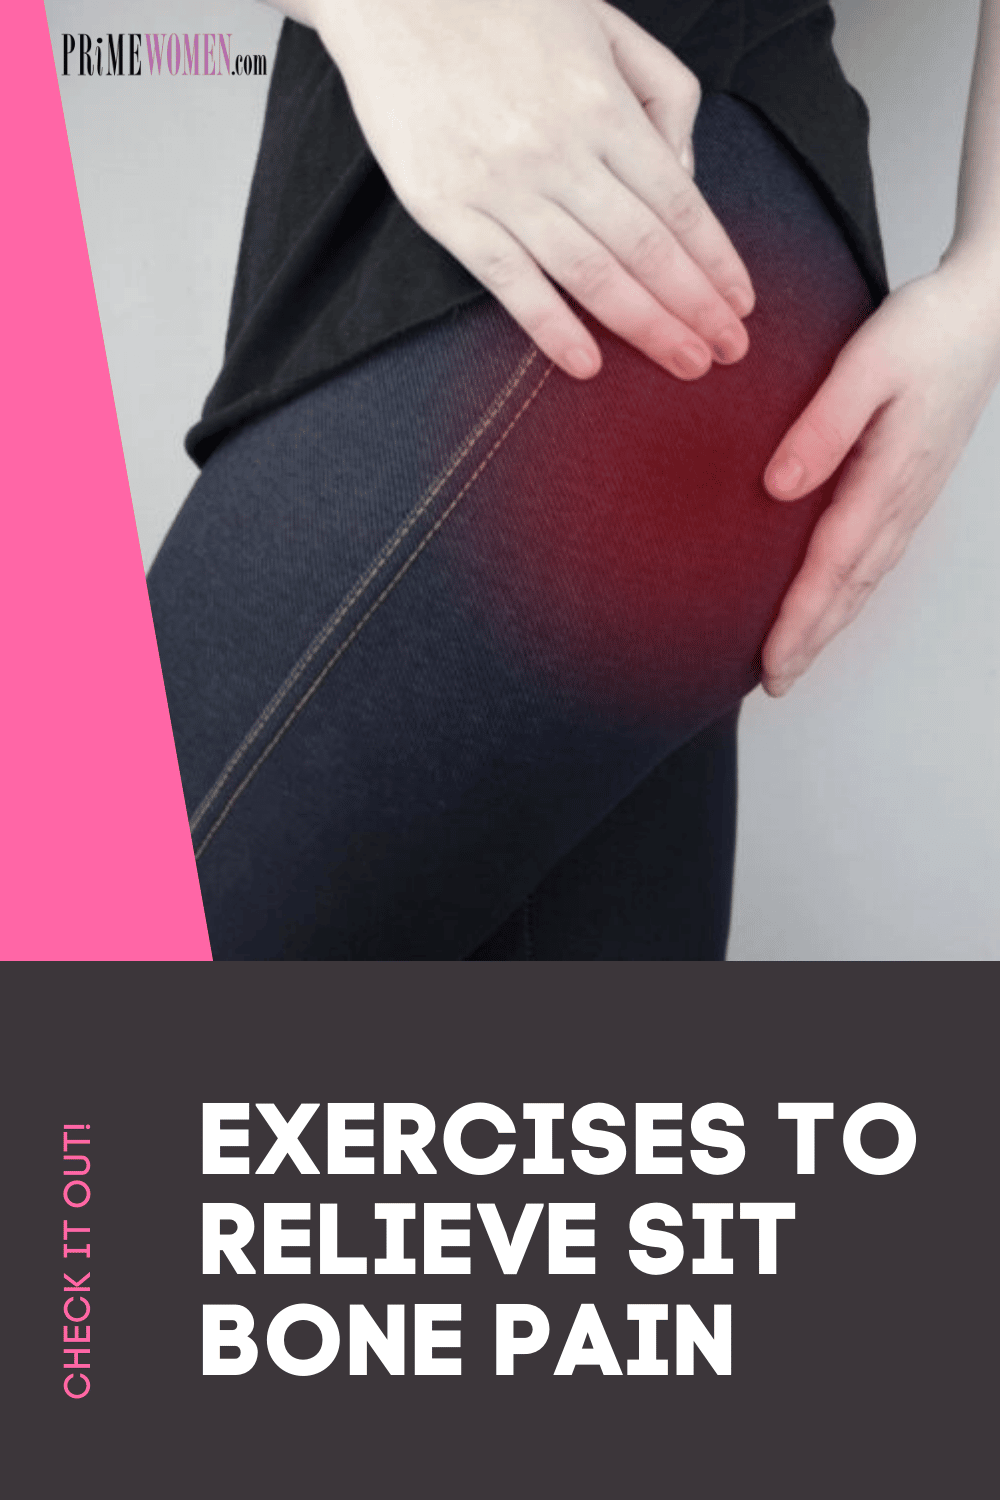 Exercises to relieve sit bone pain